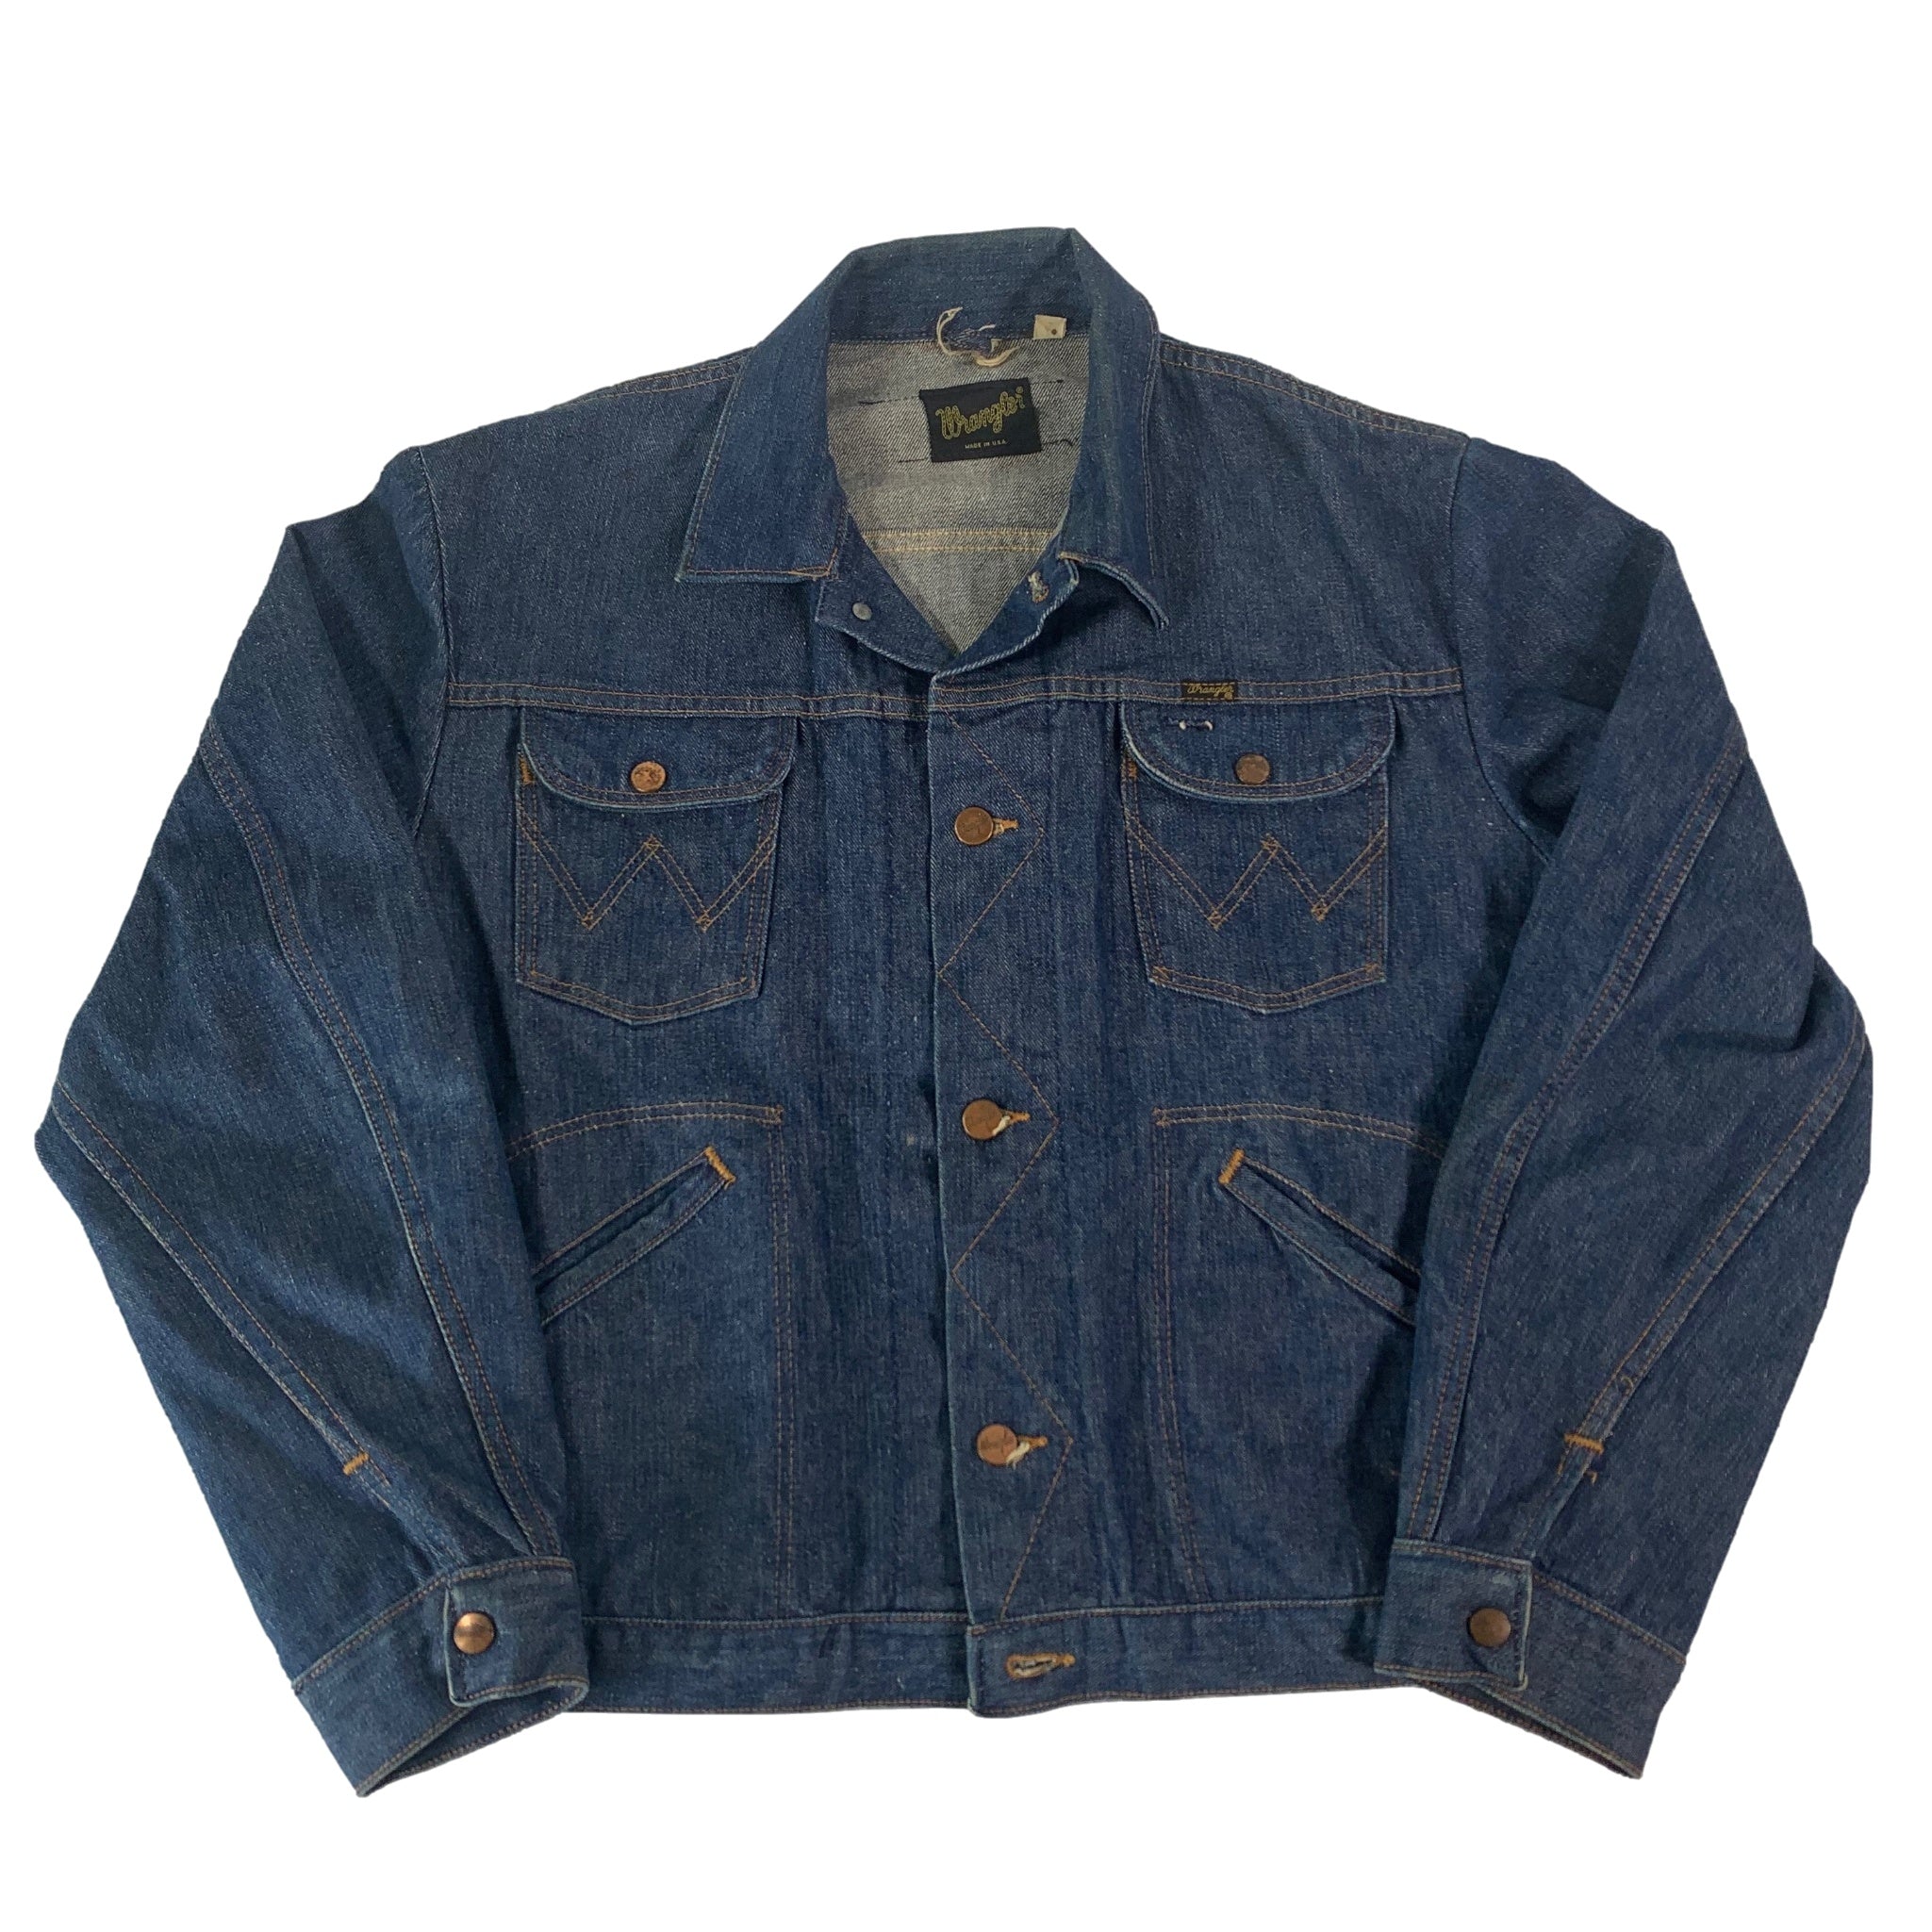 Wrangler Men's Flannel Heritage JKT Denim Jacket, Tinted Dark, L : Buy  Online at Best Price in KSA - Souq is now Amazon.sa: Fashion